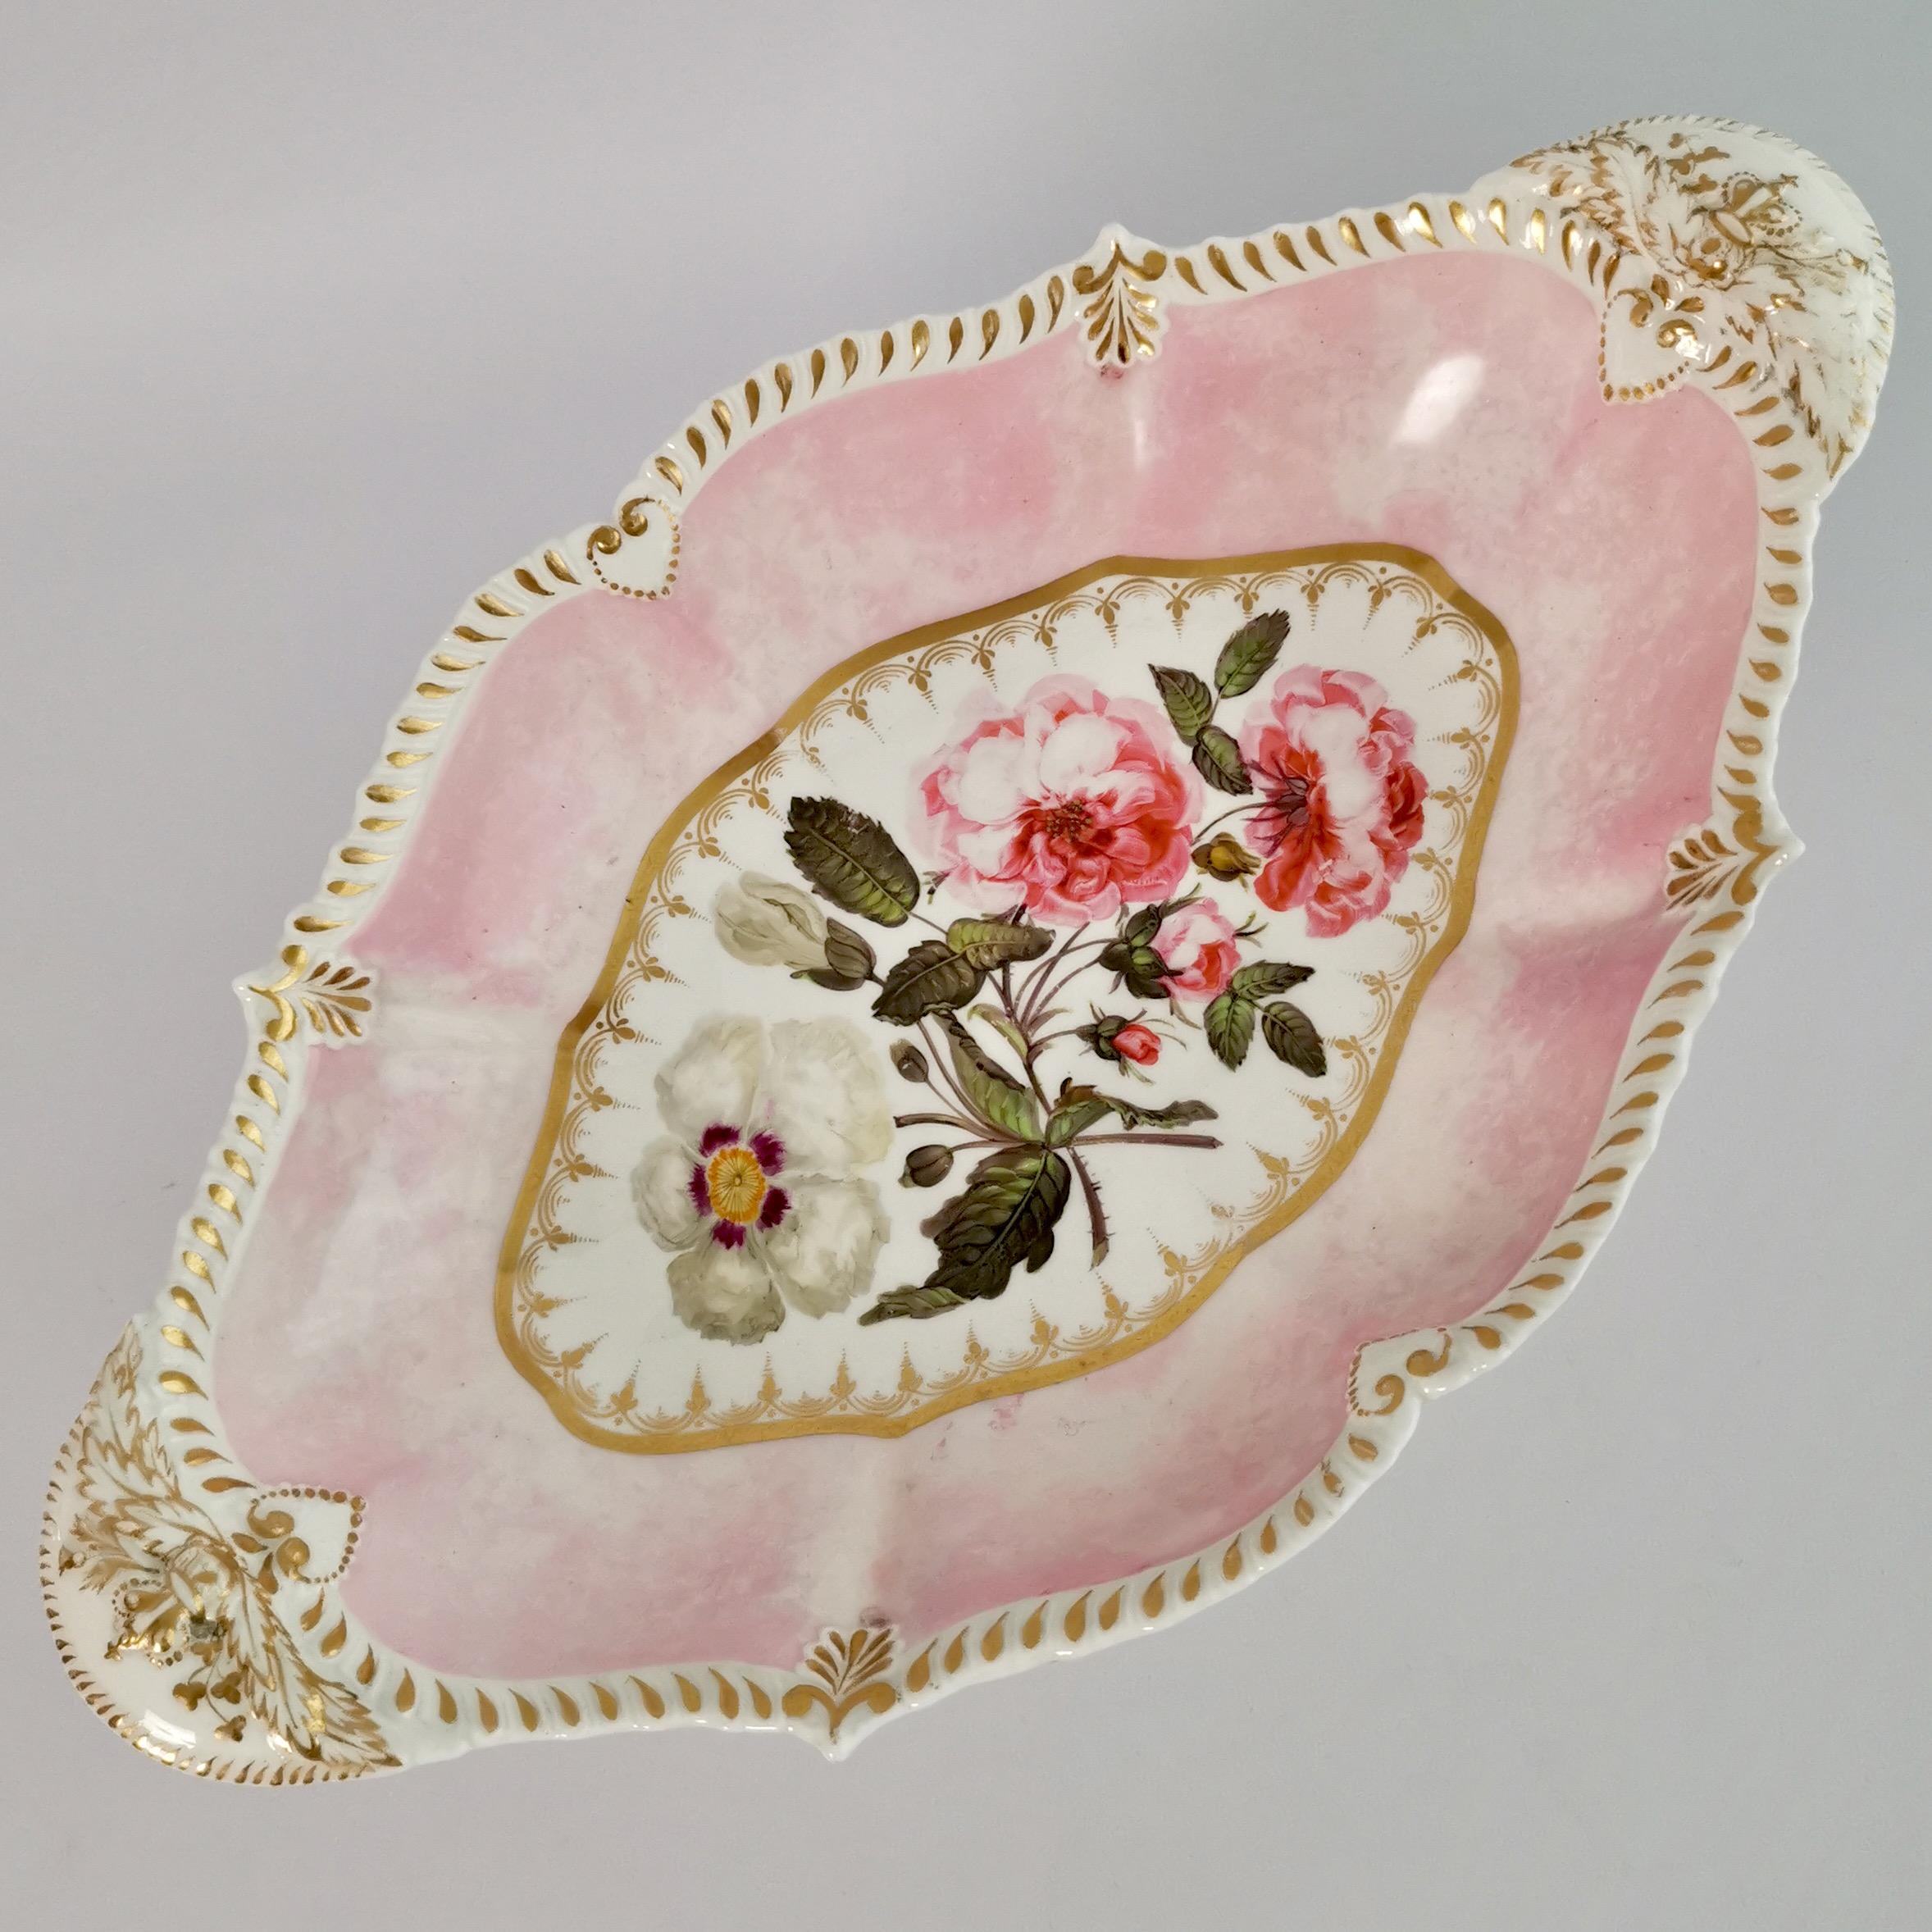 English Coalport Porcelain Dessert Service, Pink with Flowers, Regency 1820-1825